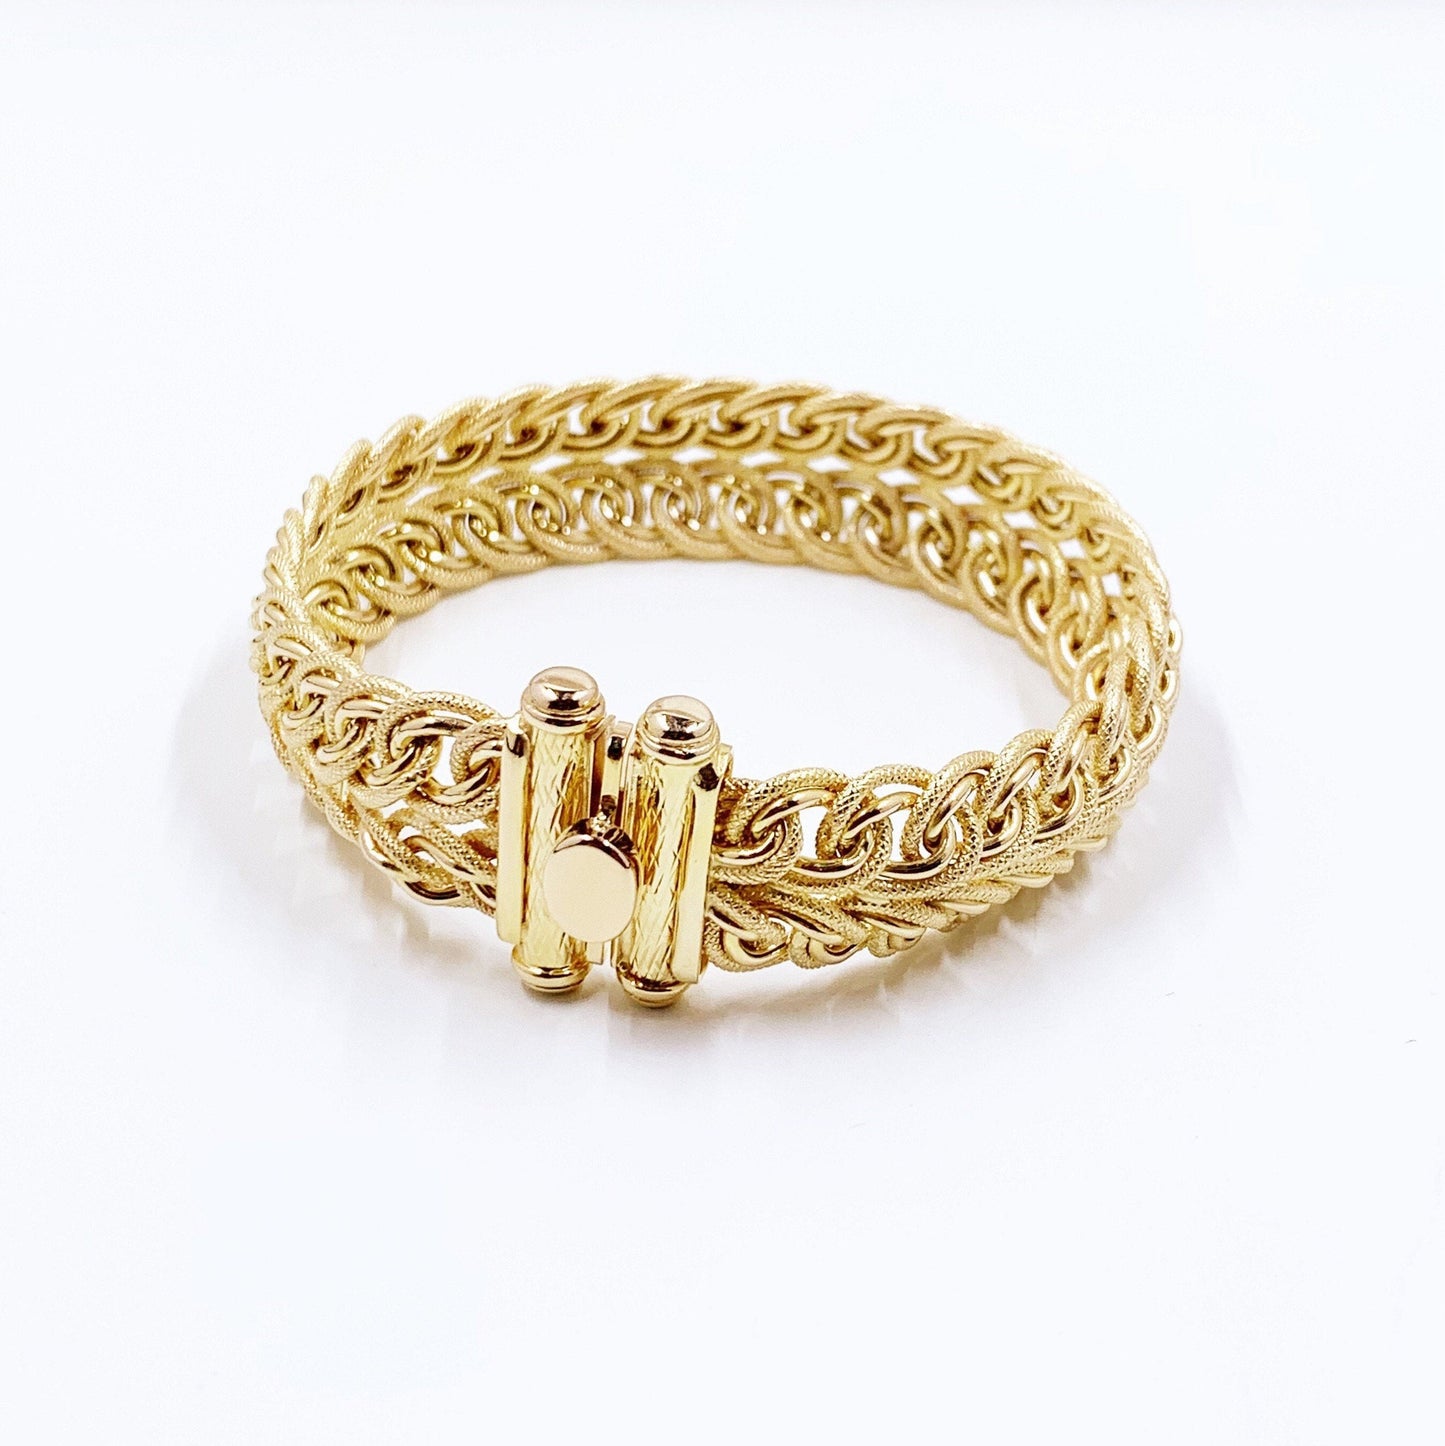 Vintage 14k Italian Gold Textured Link Woven Bracelet | 7.6875 inch Gold Bracelet | 14.8 mm Bracelet